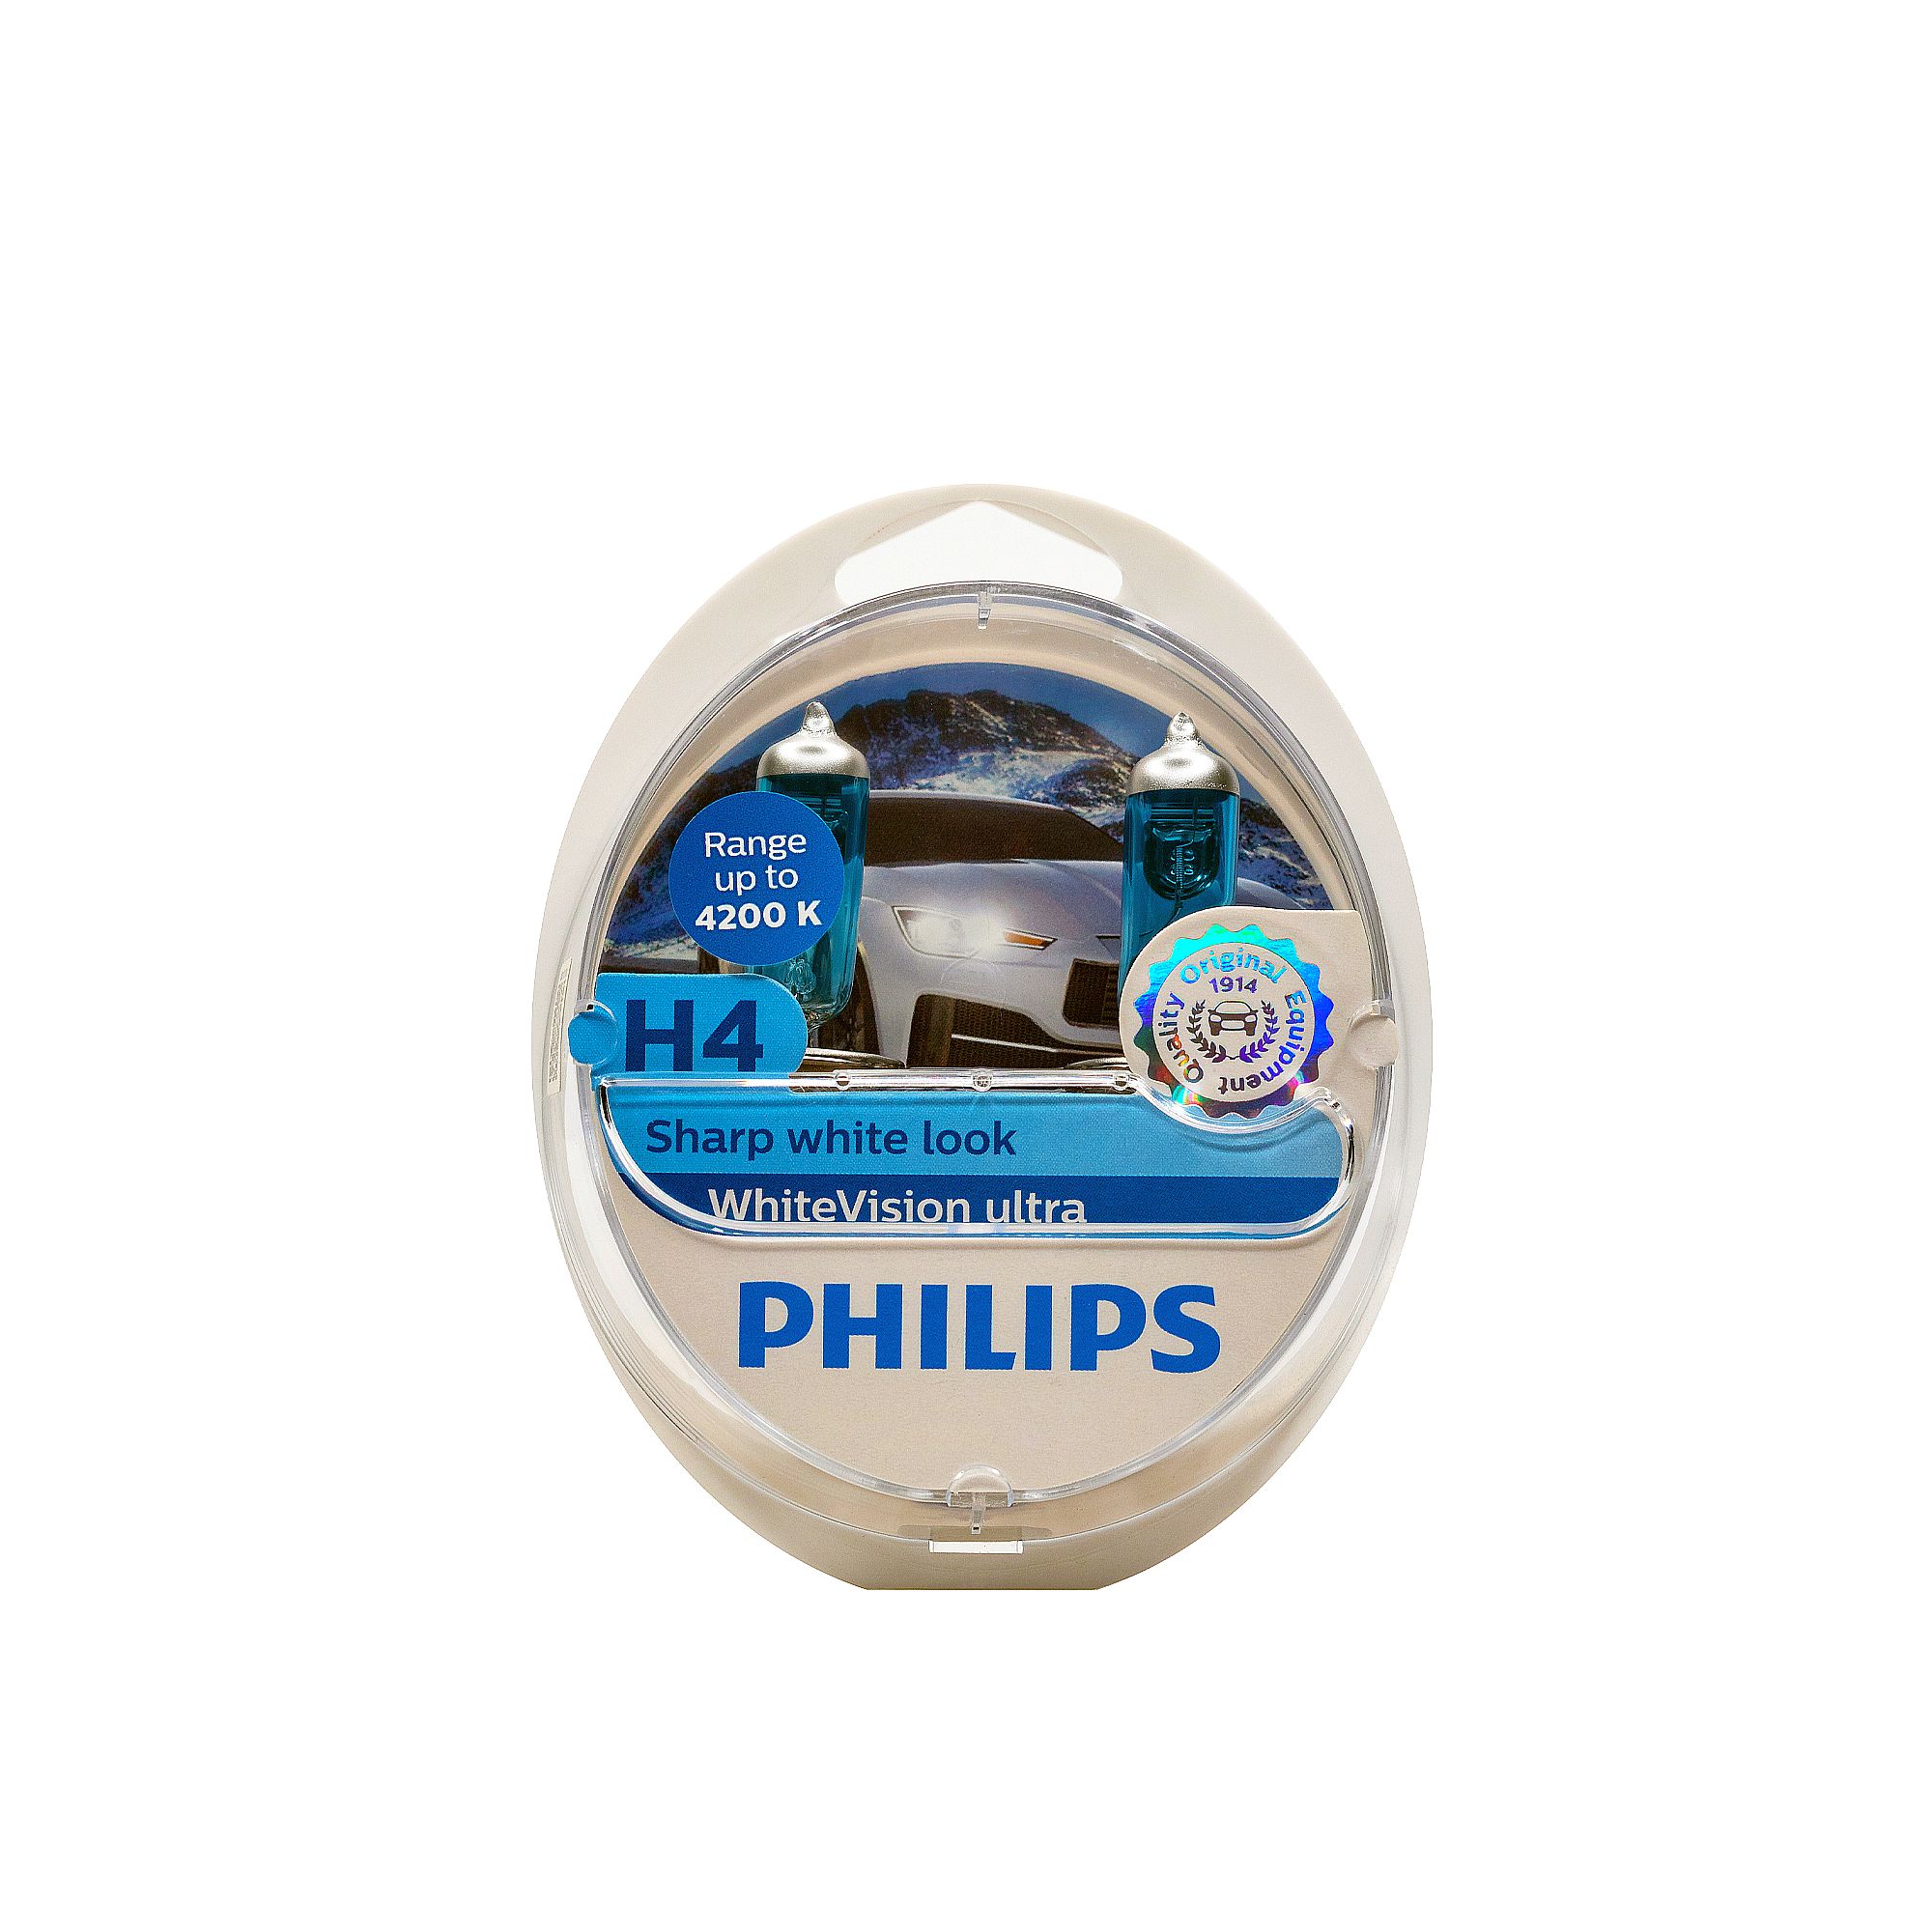 Philips WhiteVision Ultra, OSRAM Cool Blue Intense, GE Sportlight